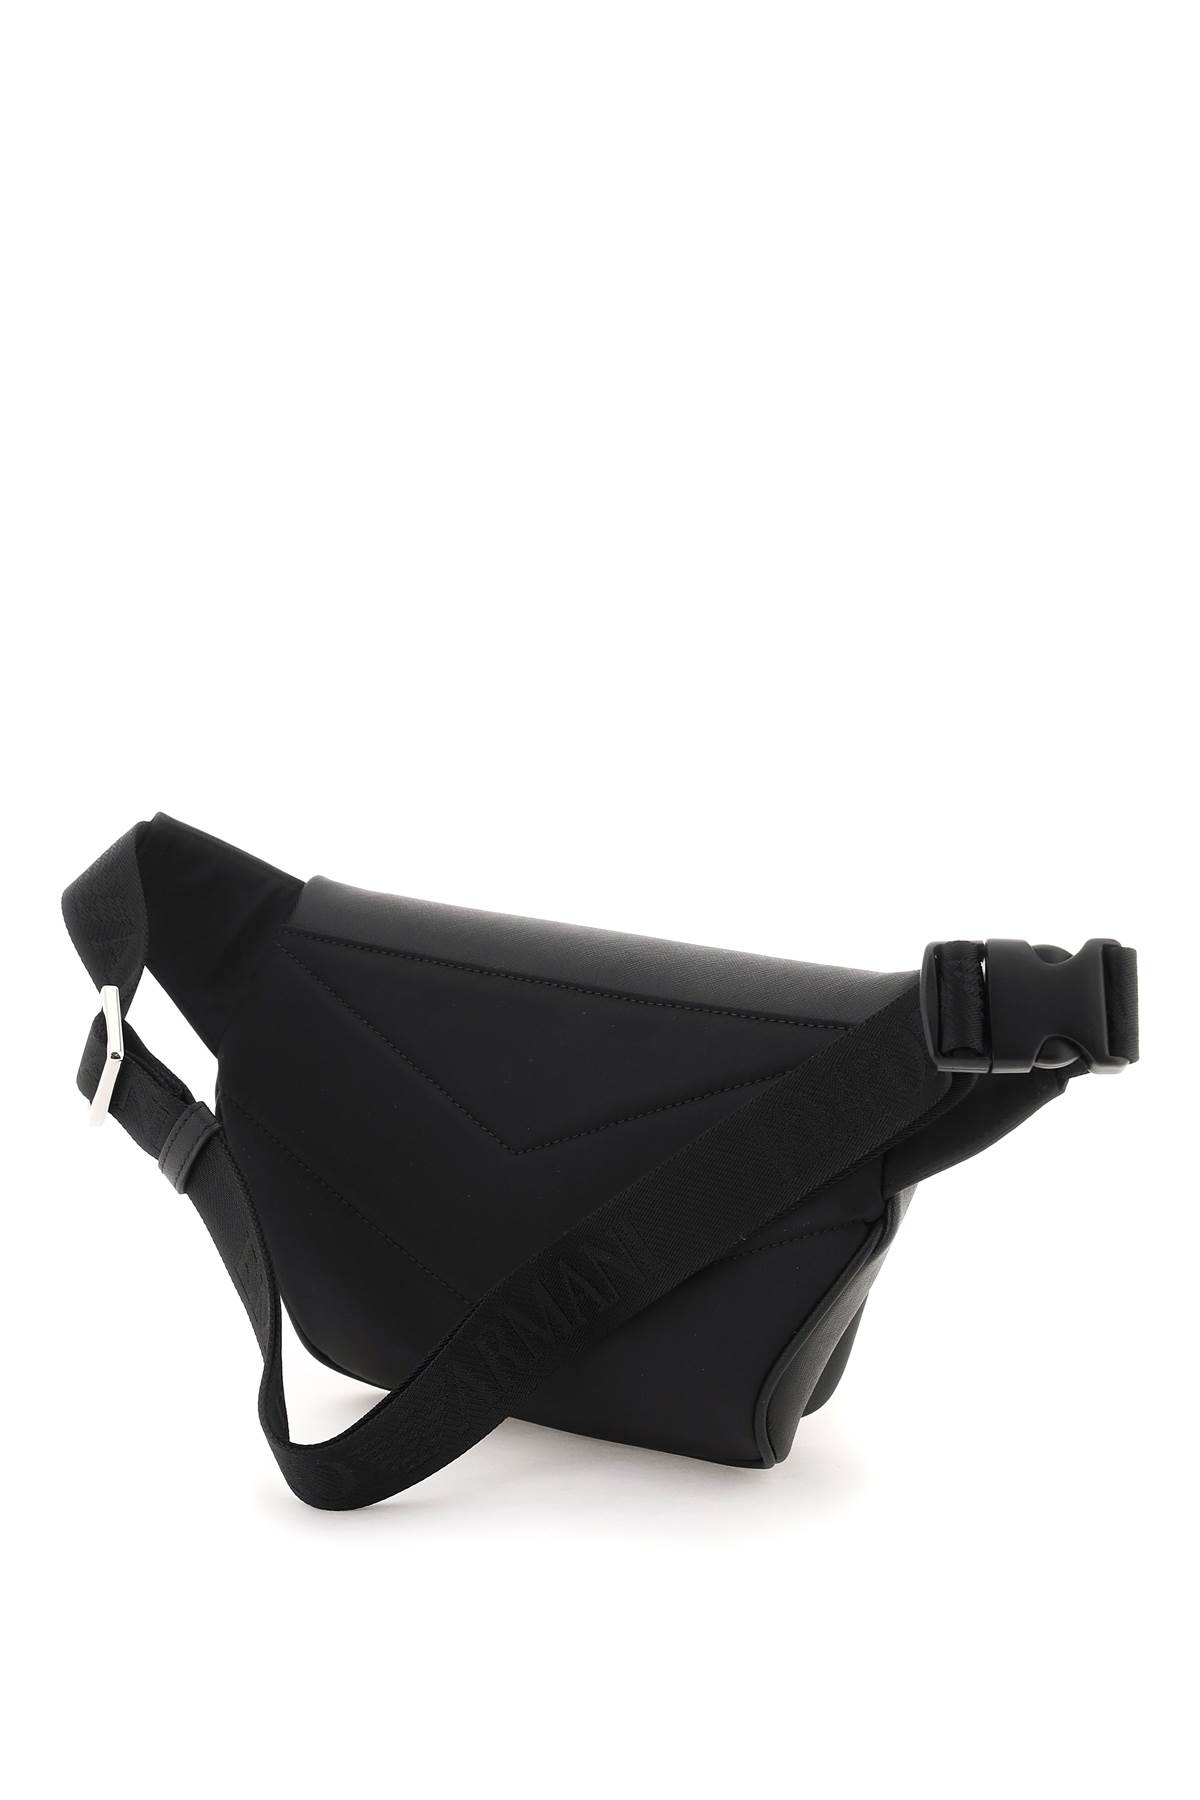 Shop Emporio Armani Regenerated Leather Beltpack In Black